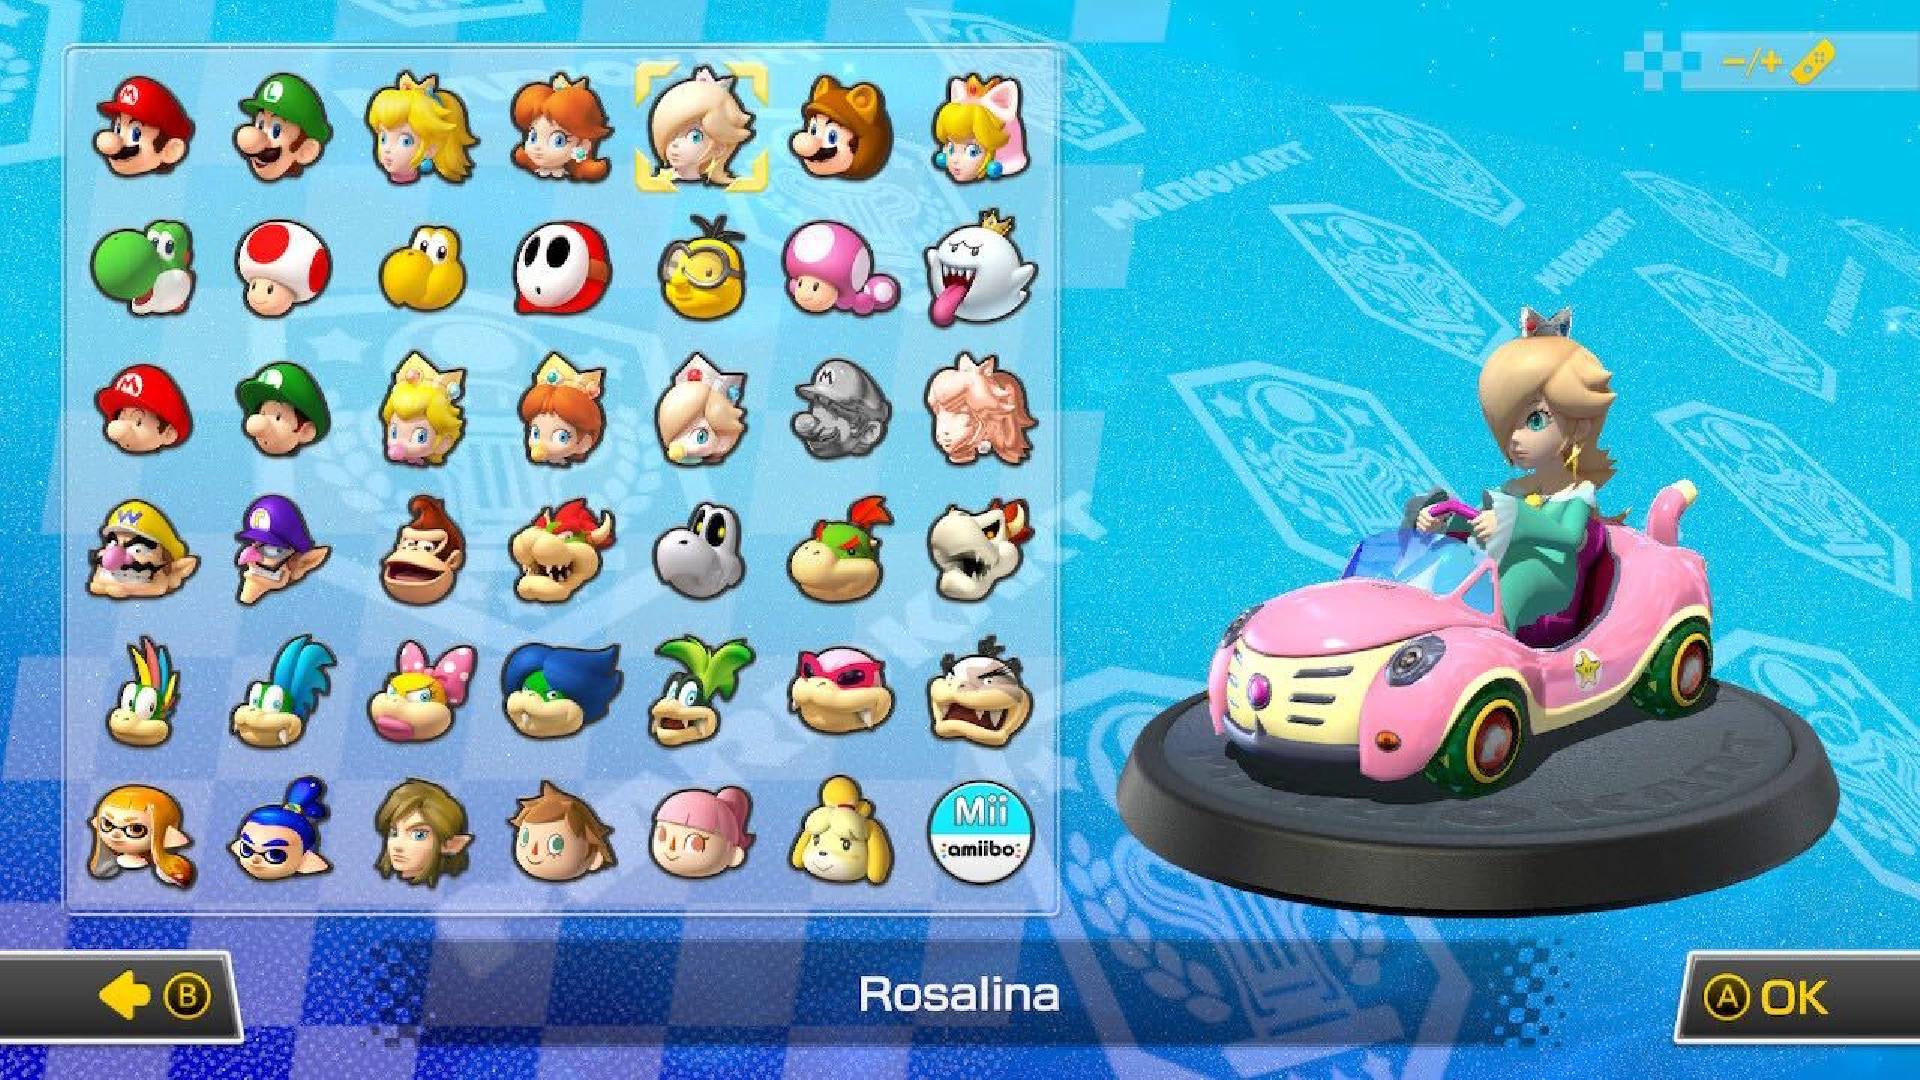 Princess Daisy Princess Peach Rosalina Mario Sports Mix Mario Kart